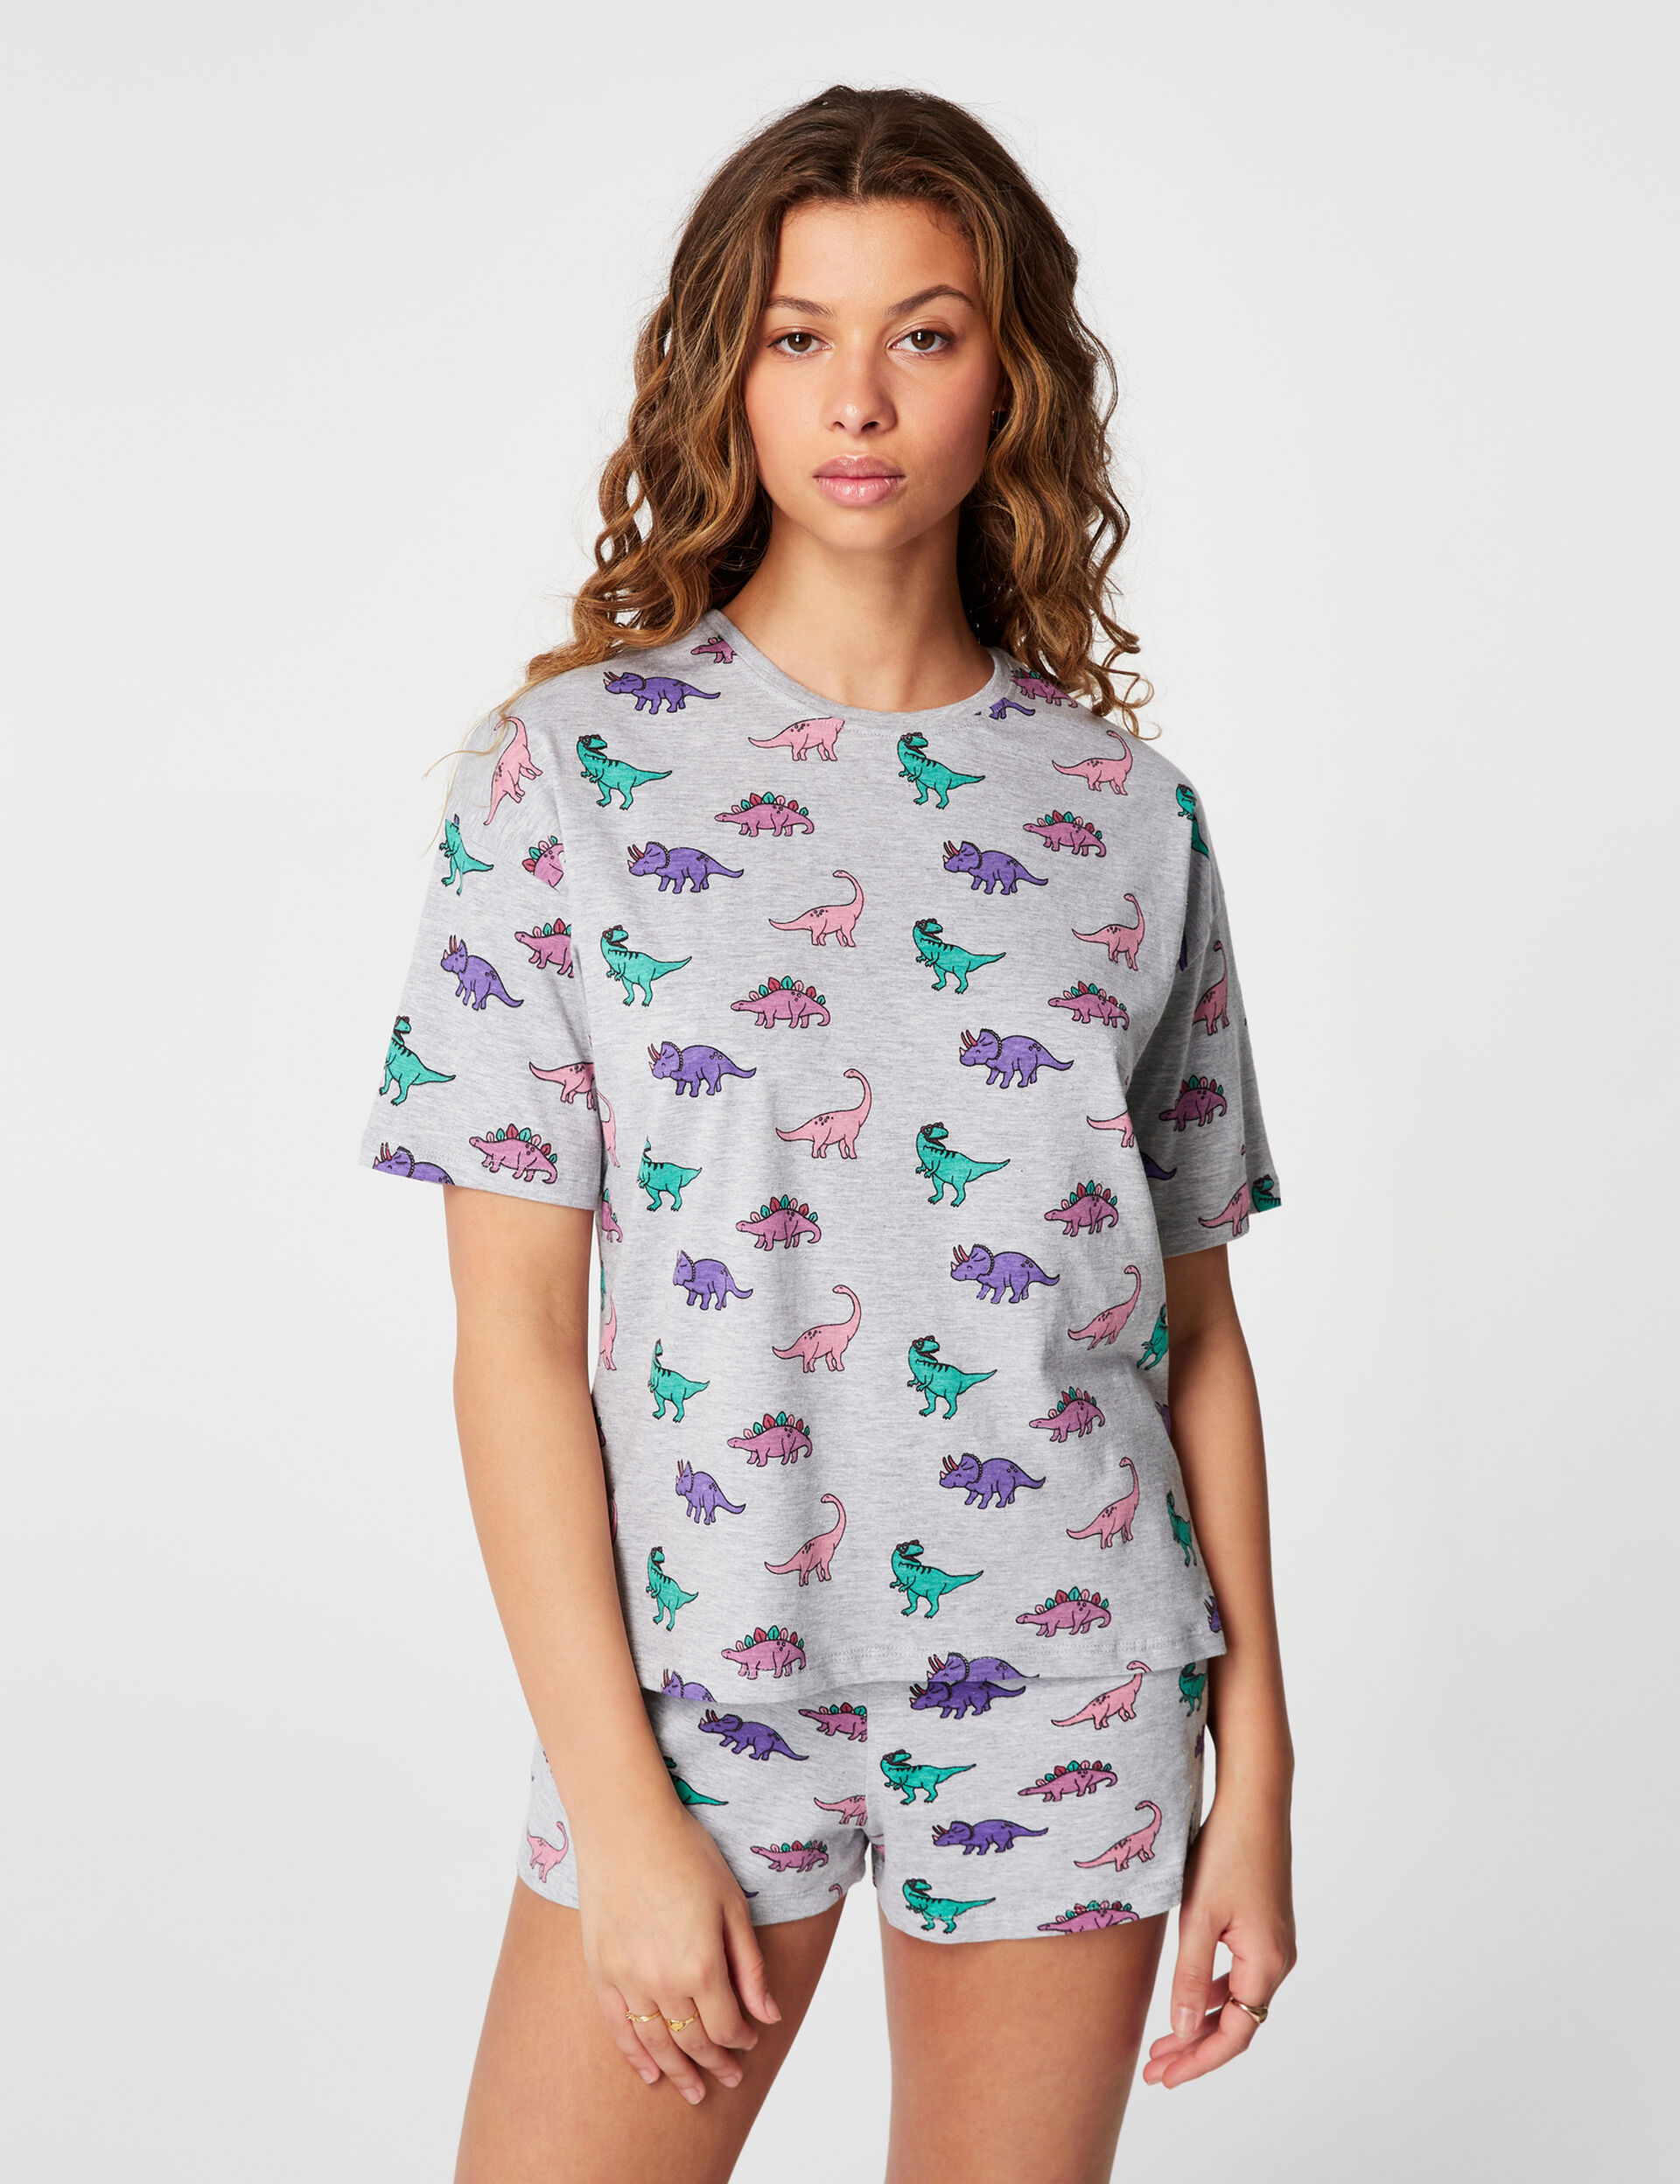 Dinosaur pyjama set